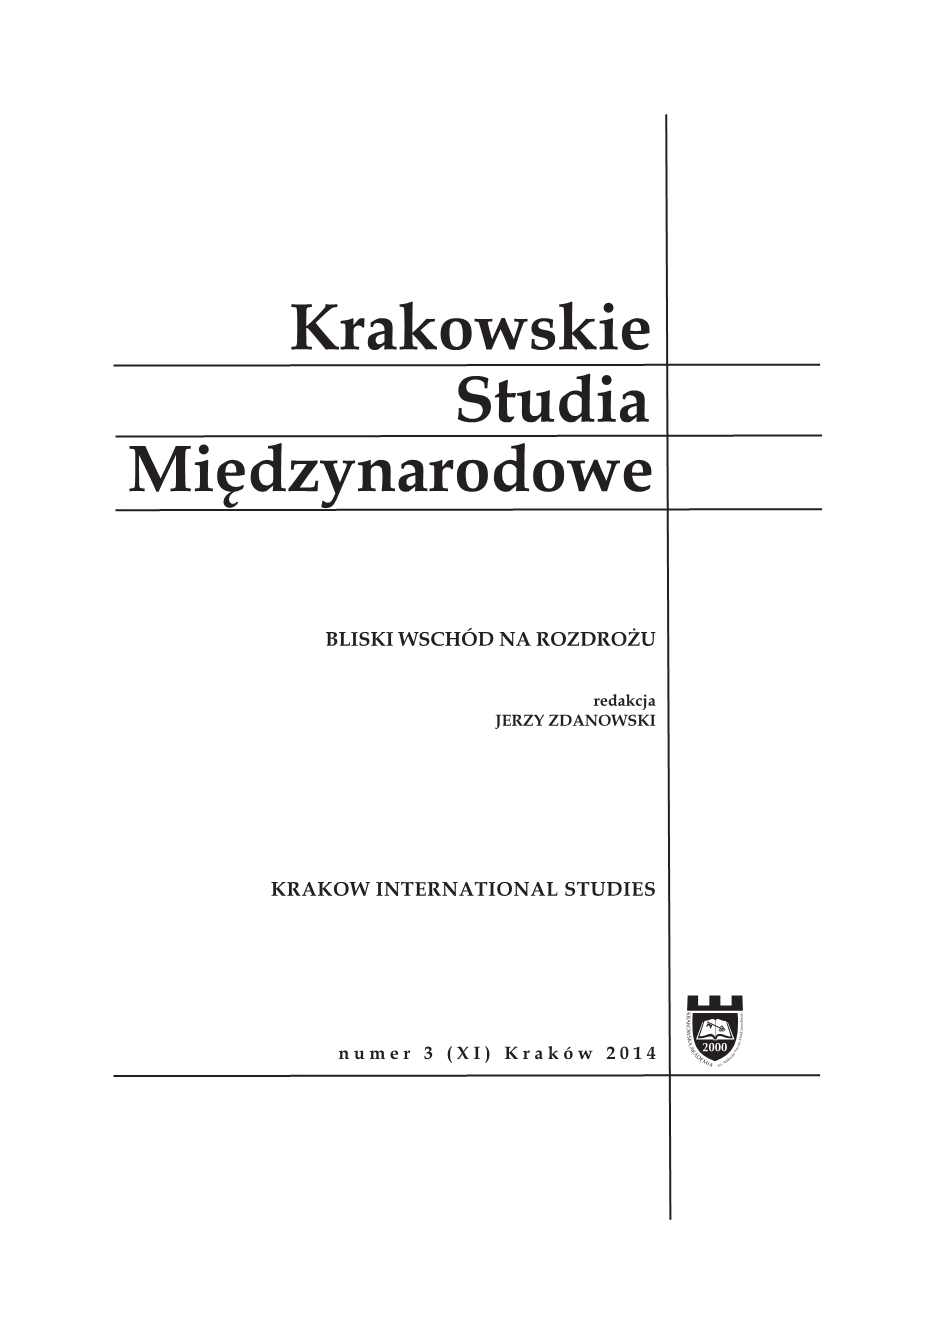 The memory of Prof. Roman Sławiński Cover Image